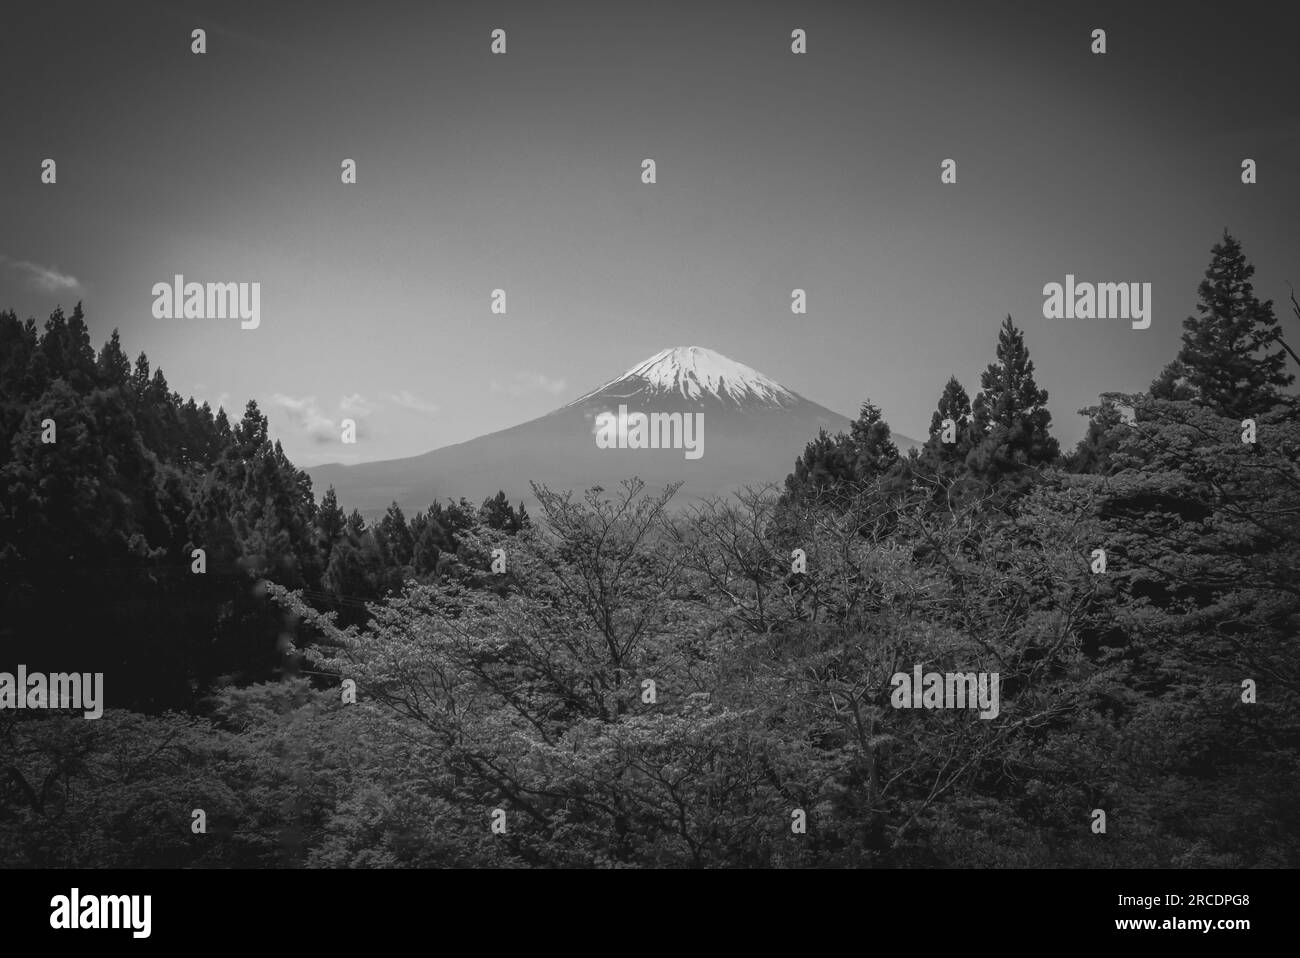 Monocrematic photo of Mt Fuji Japan Stock Photo